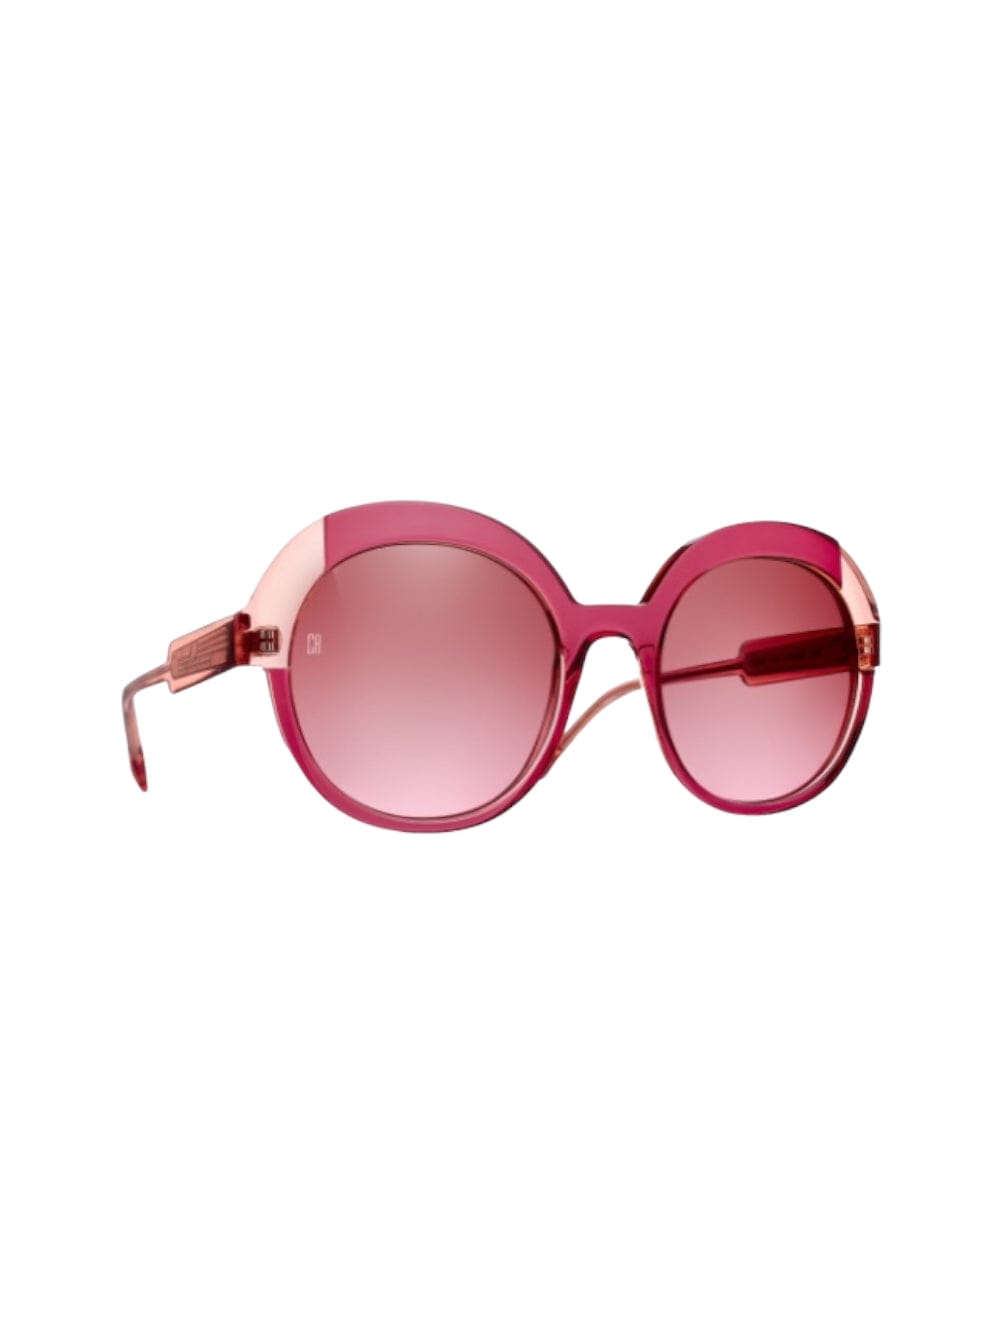 Caroline Abram Hailey - Pink Sunglasses